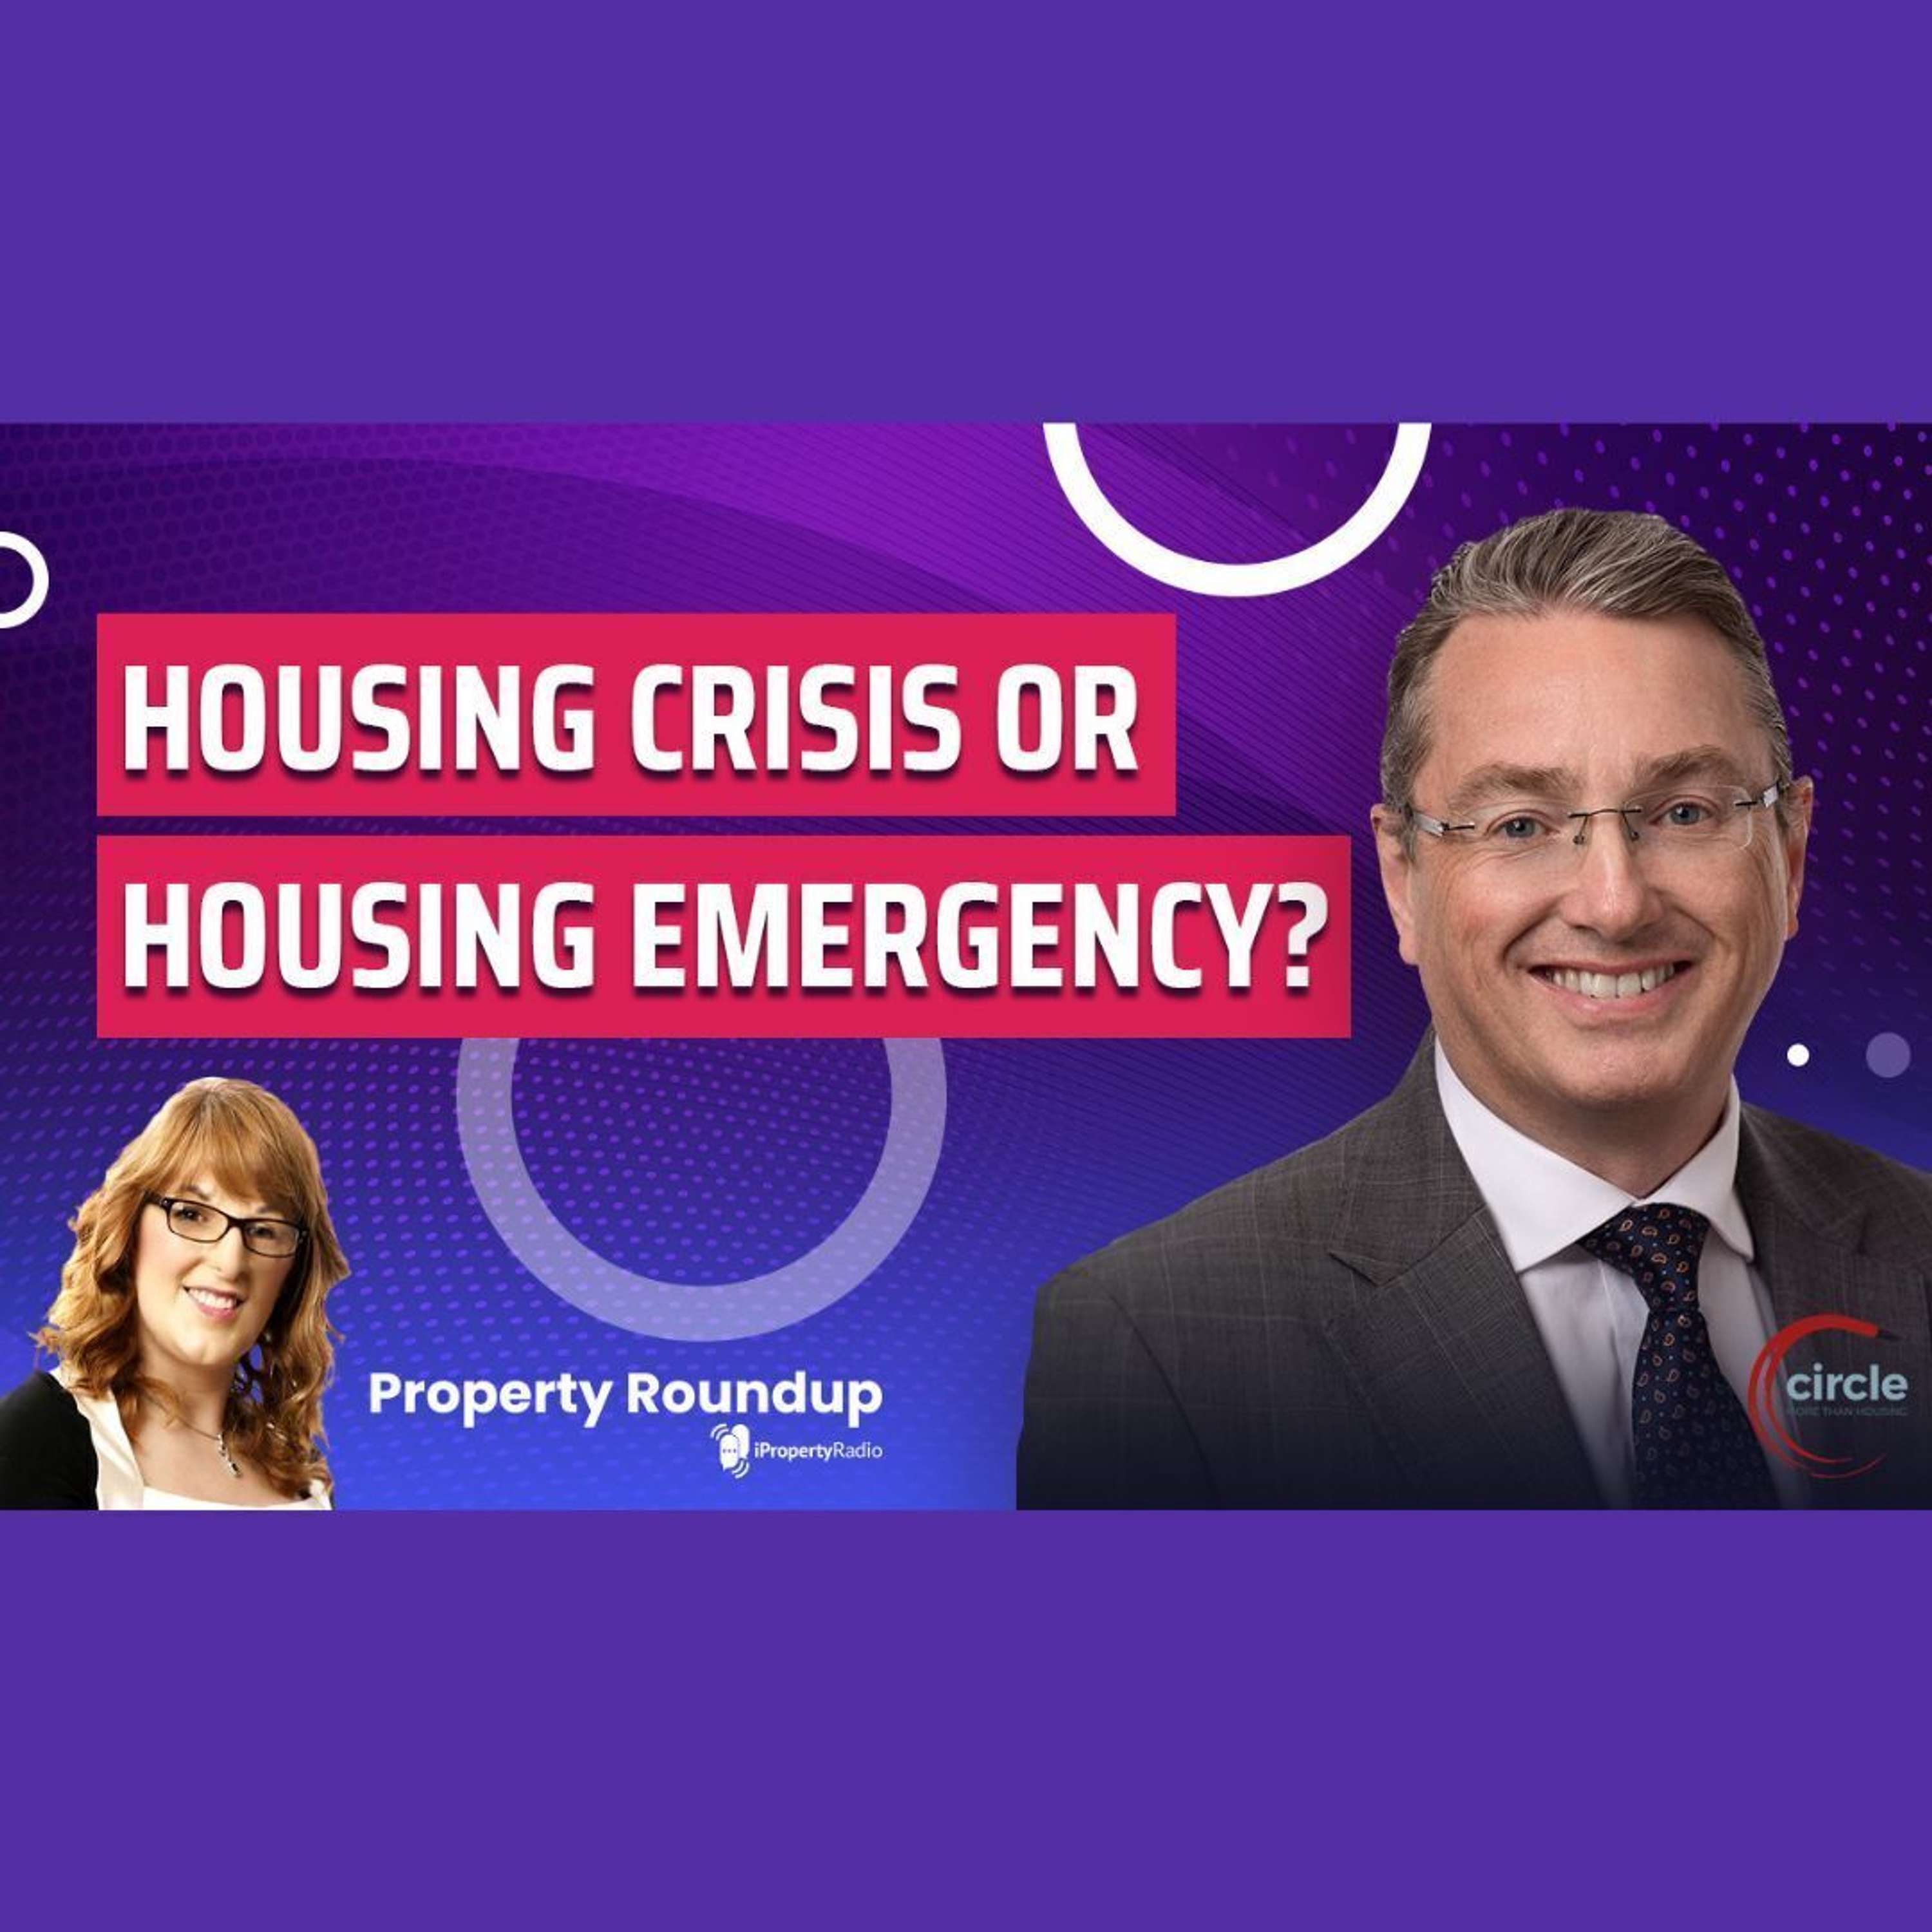 Housing Crisis or Housing Emergency?